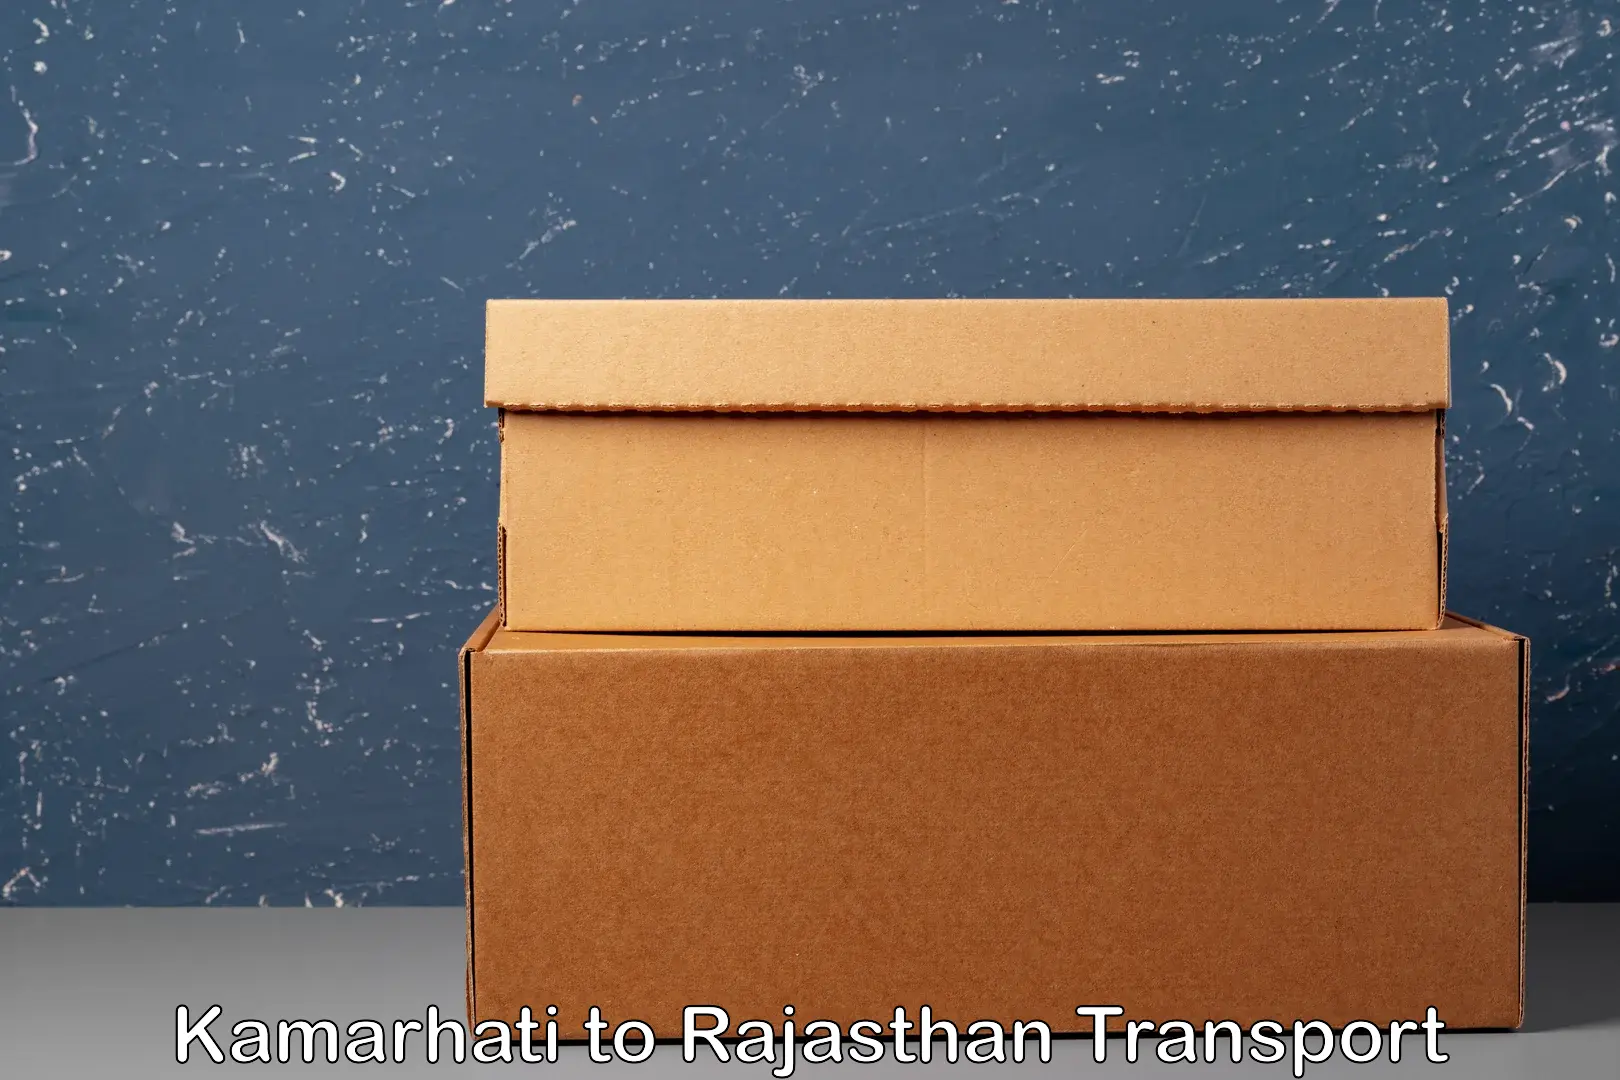 Truck transport companies in India Kamarhati to Bhinder